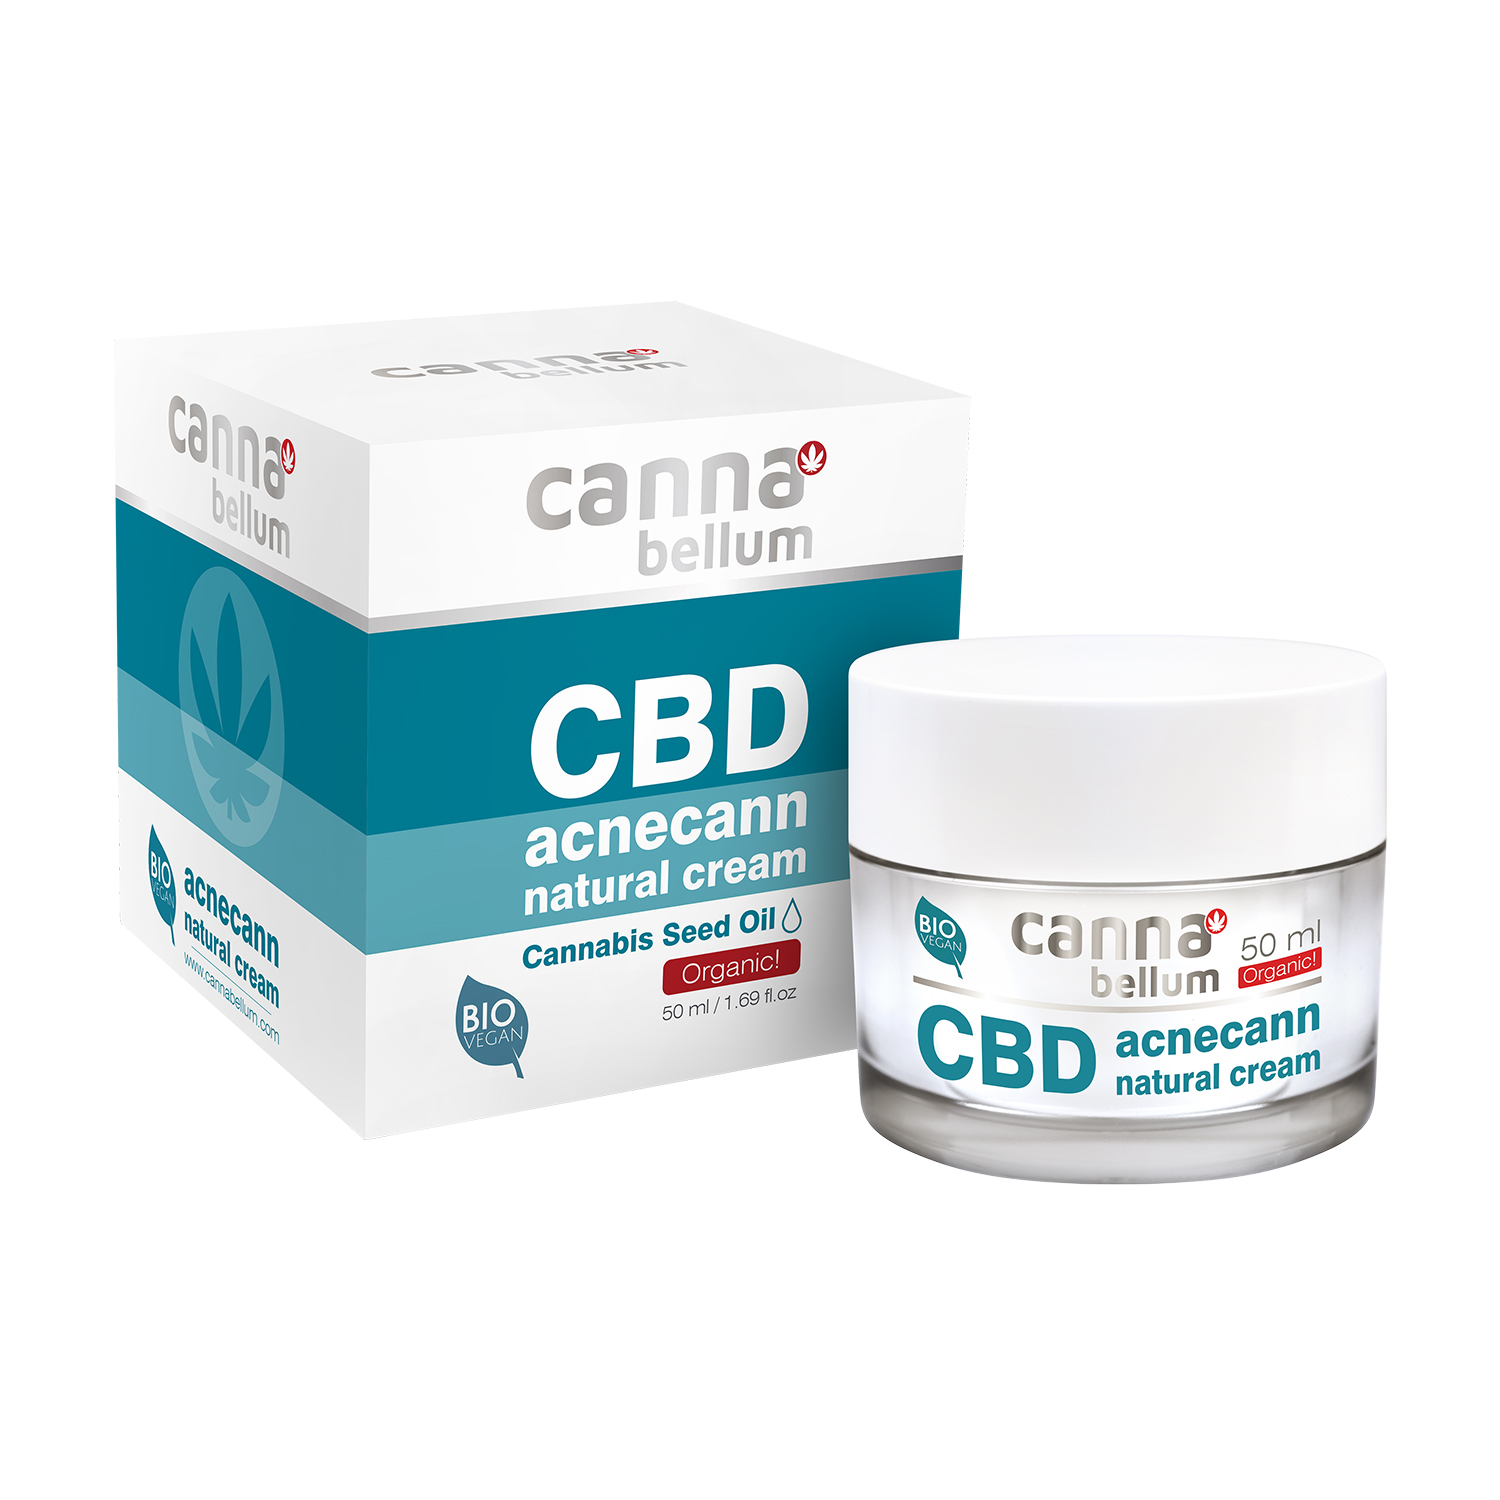 Cannabellum CBD acnecann natural cream 50ml P1244 komplet WEB 50